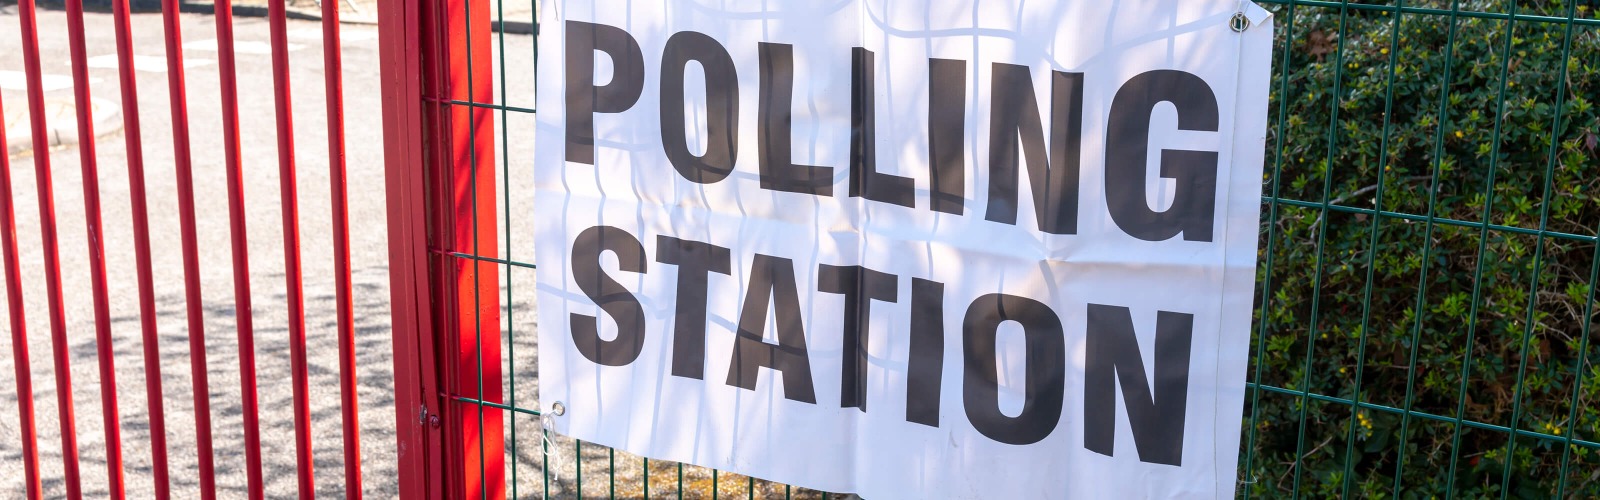 Polling station sign